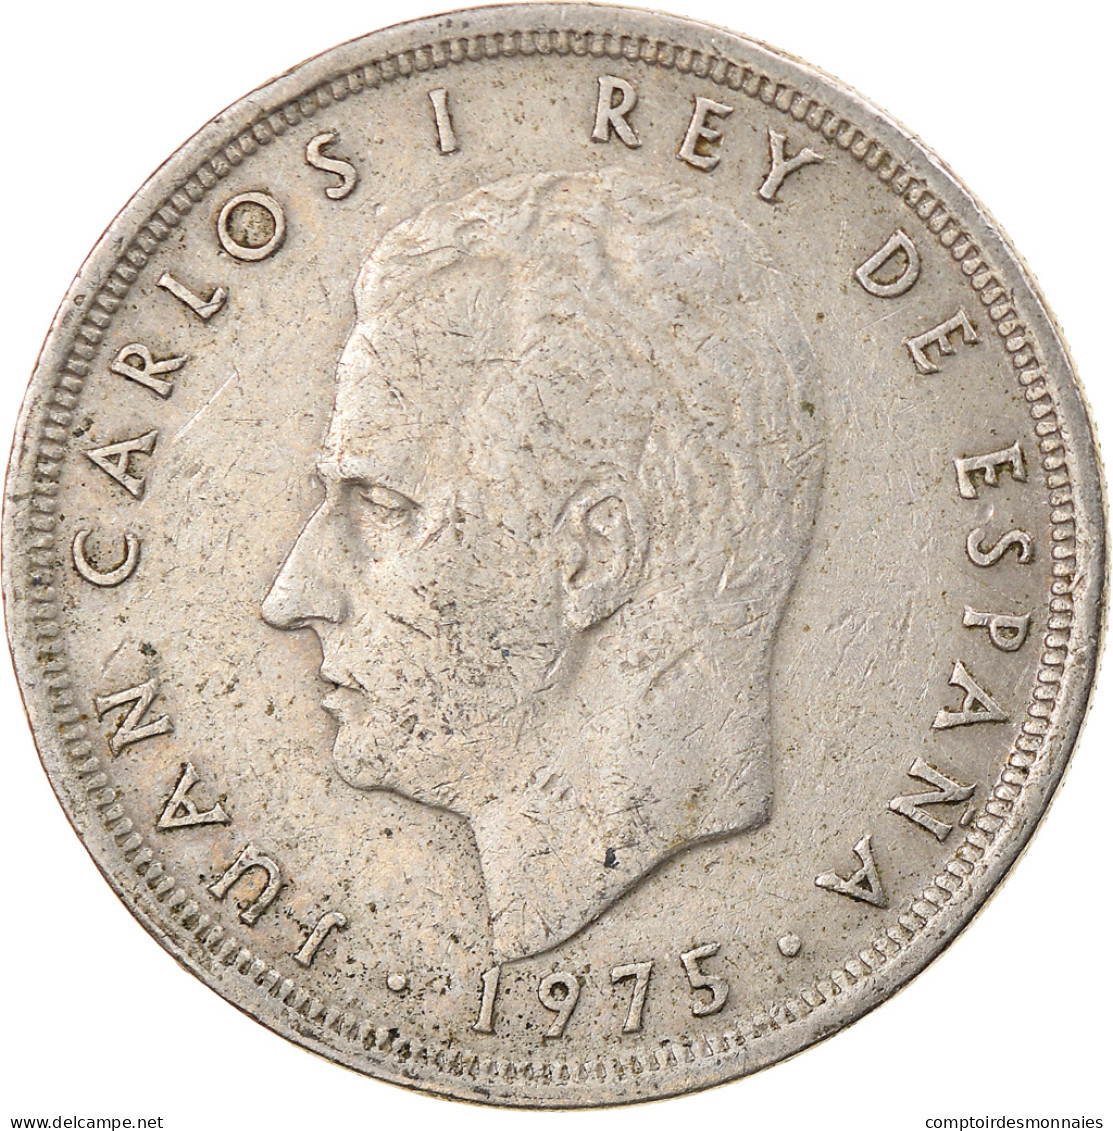 Monnaie, Espagne, Juan Carlos I, 5 Pesetas, 1980, TB, Copper-nickel, KM:807 - 5 Pesetas